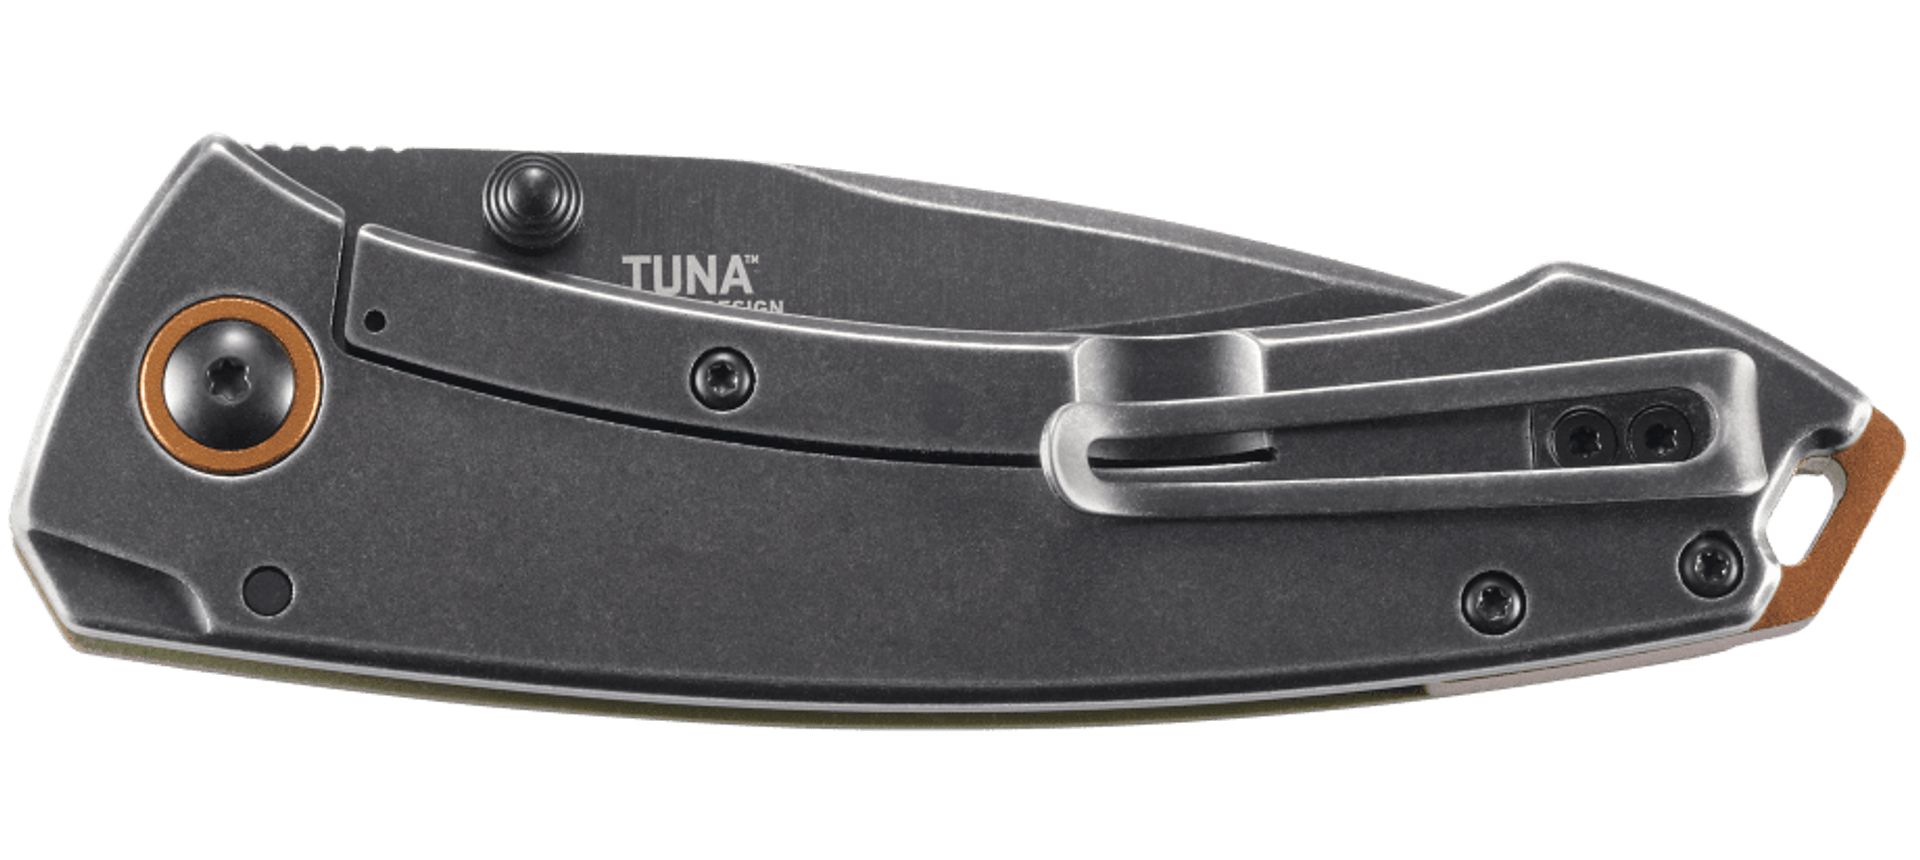 Tuna Frame Lock pocket knife